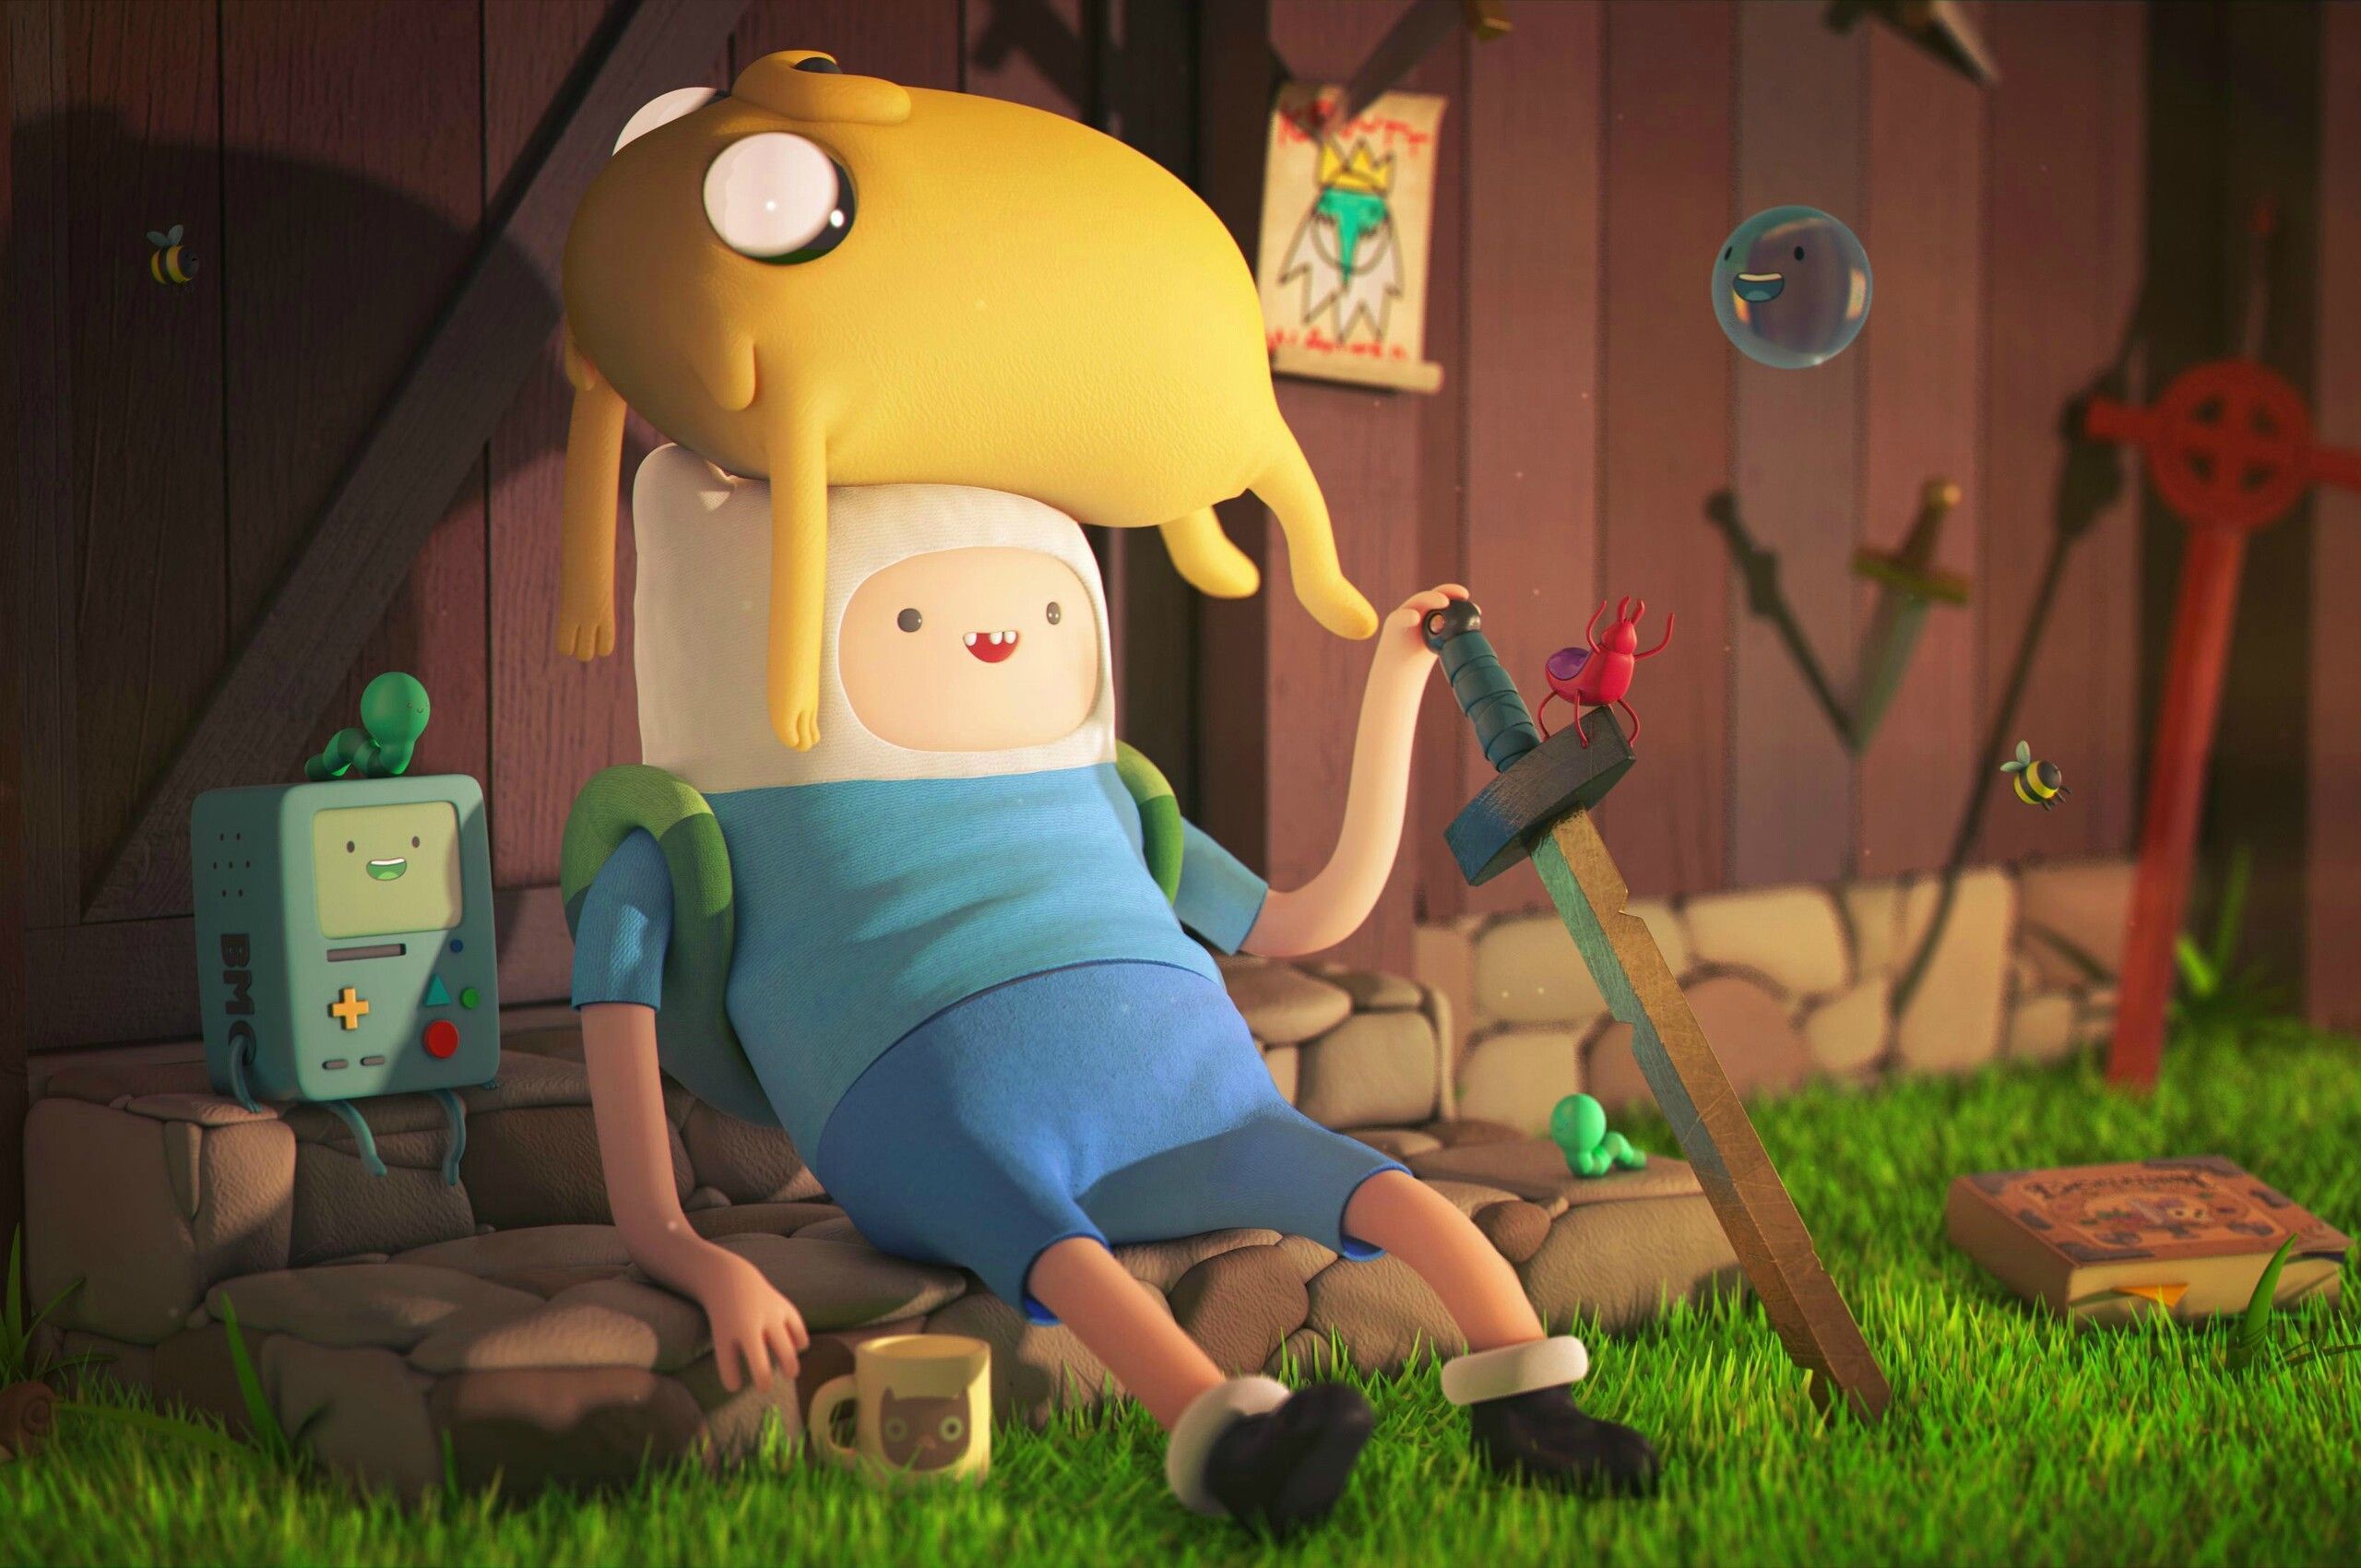 Adventure Time Finn the Human wallpaper 2560x1440 - Adventure Time